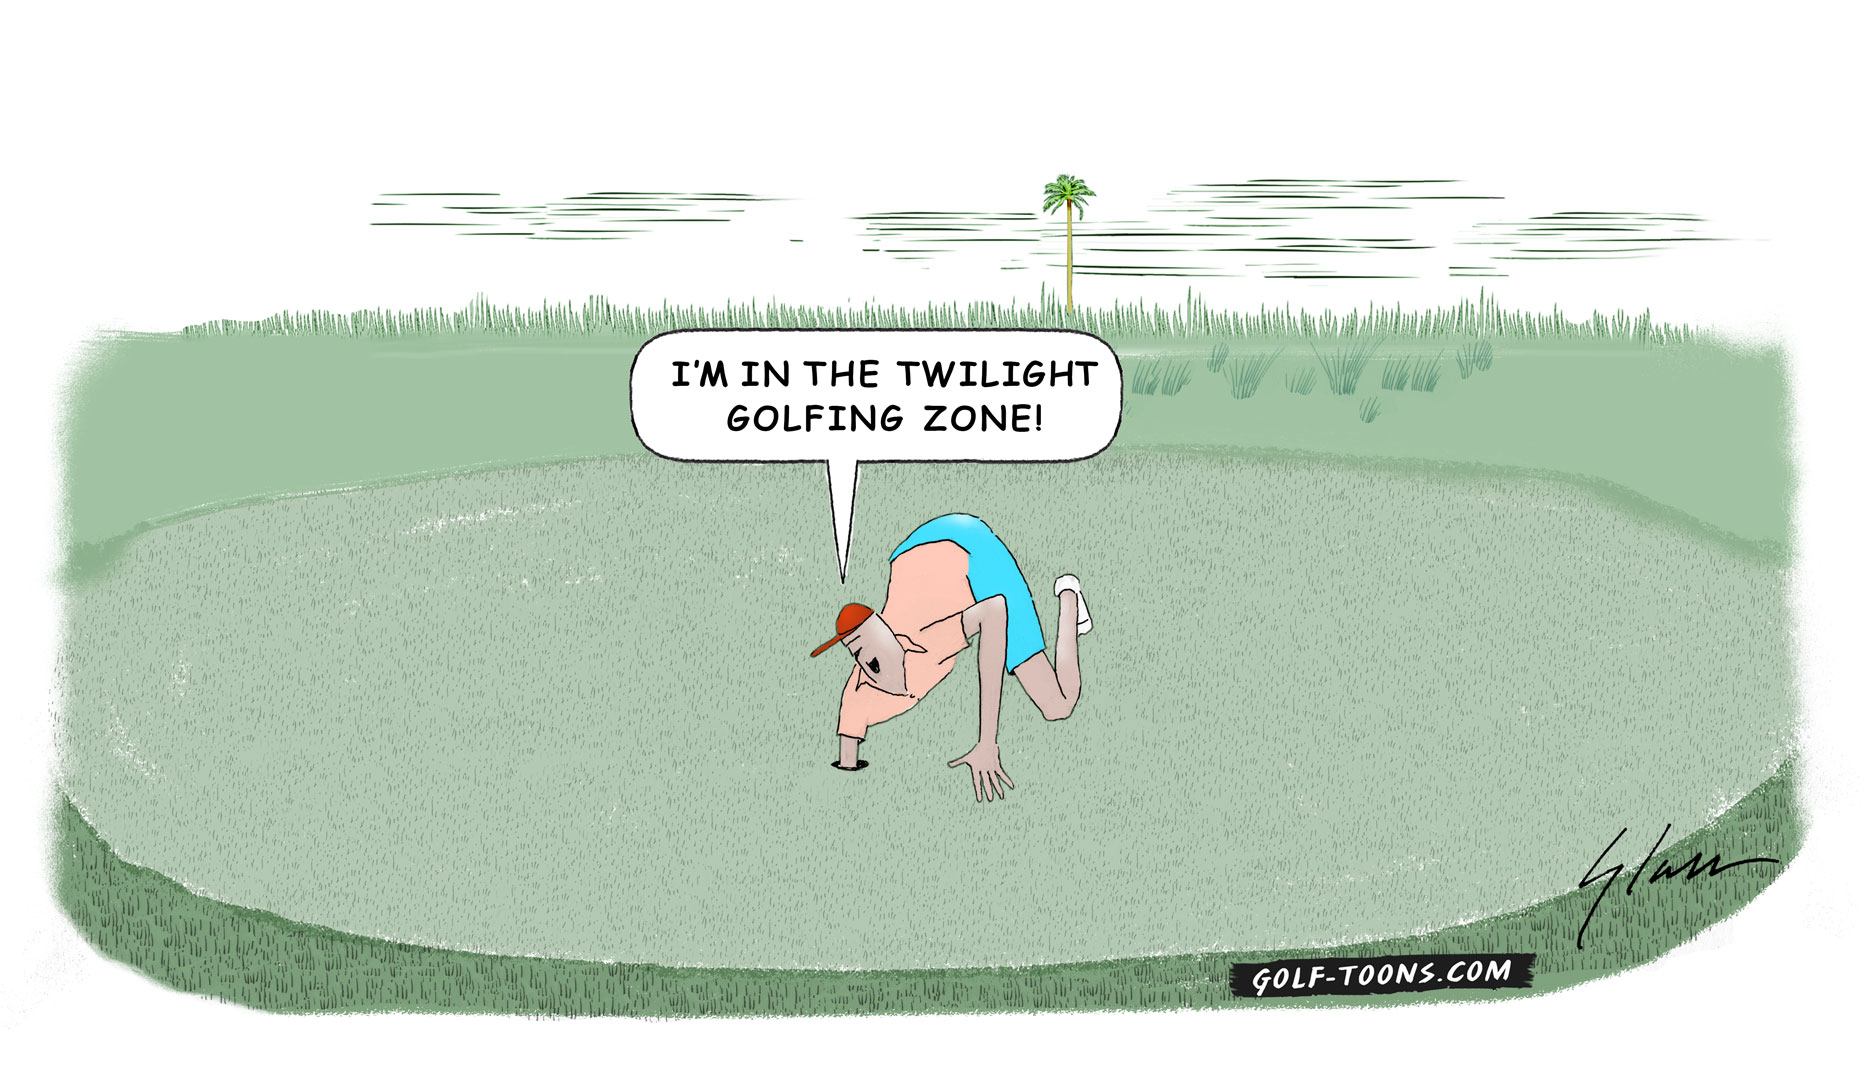 Twilight Golf Zone, strange things can happen.